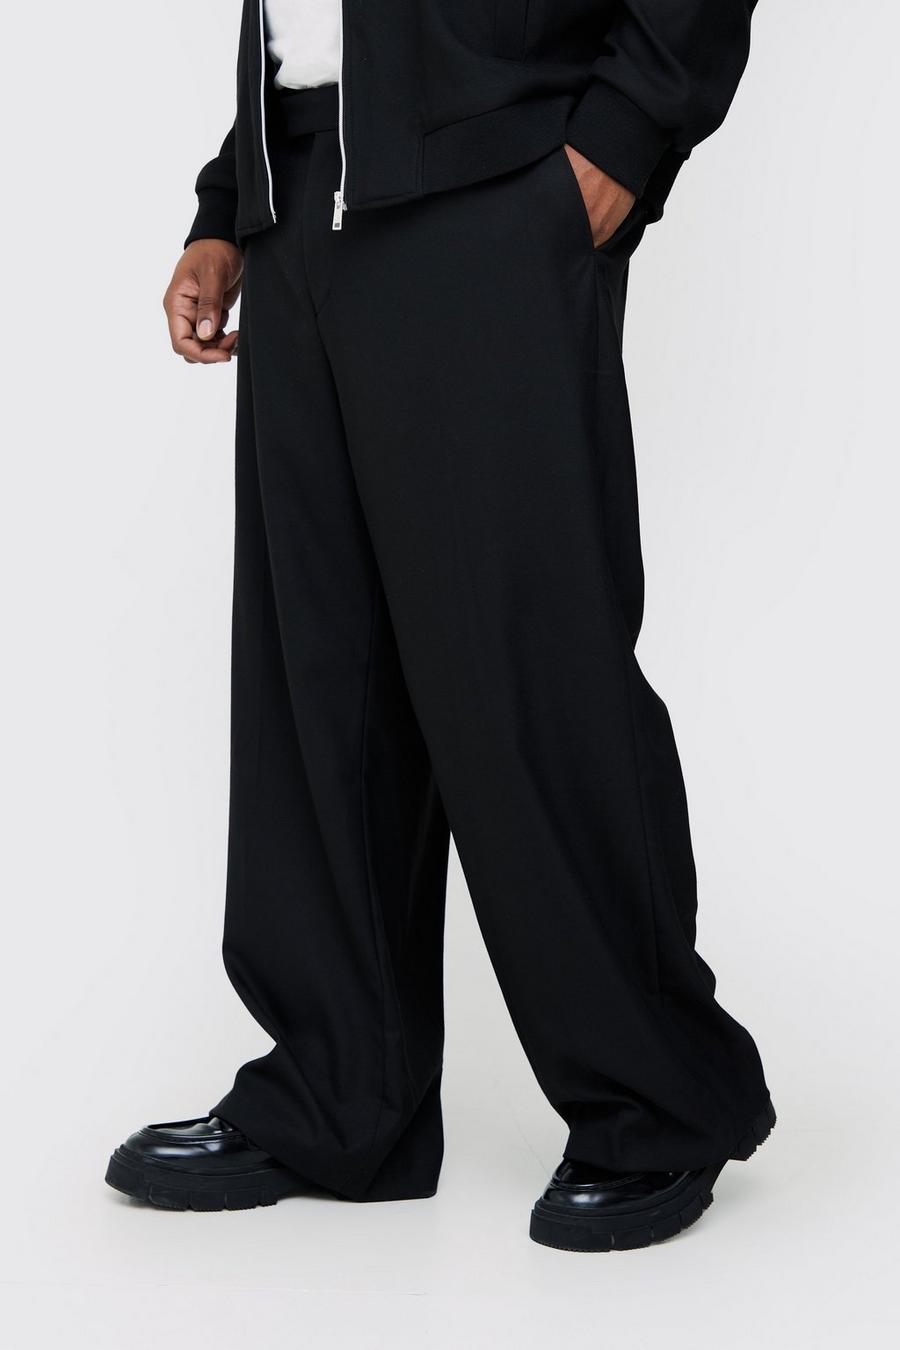 Grande taille - Pantalon droit à rayures, Black